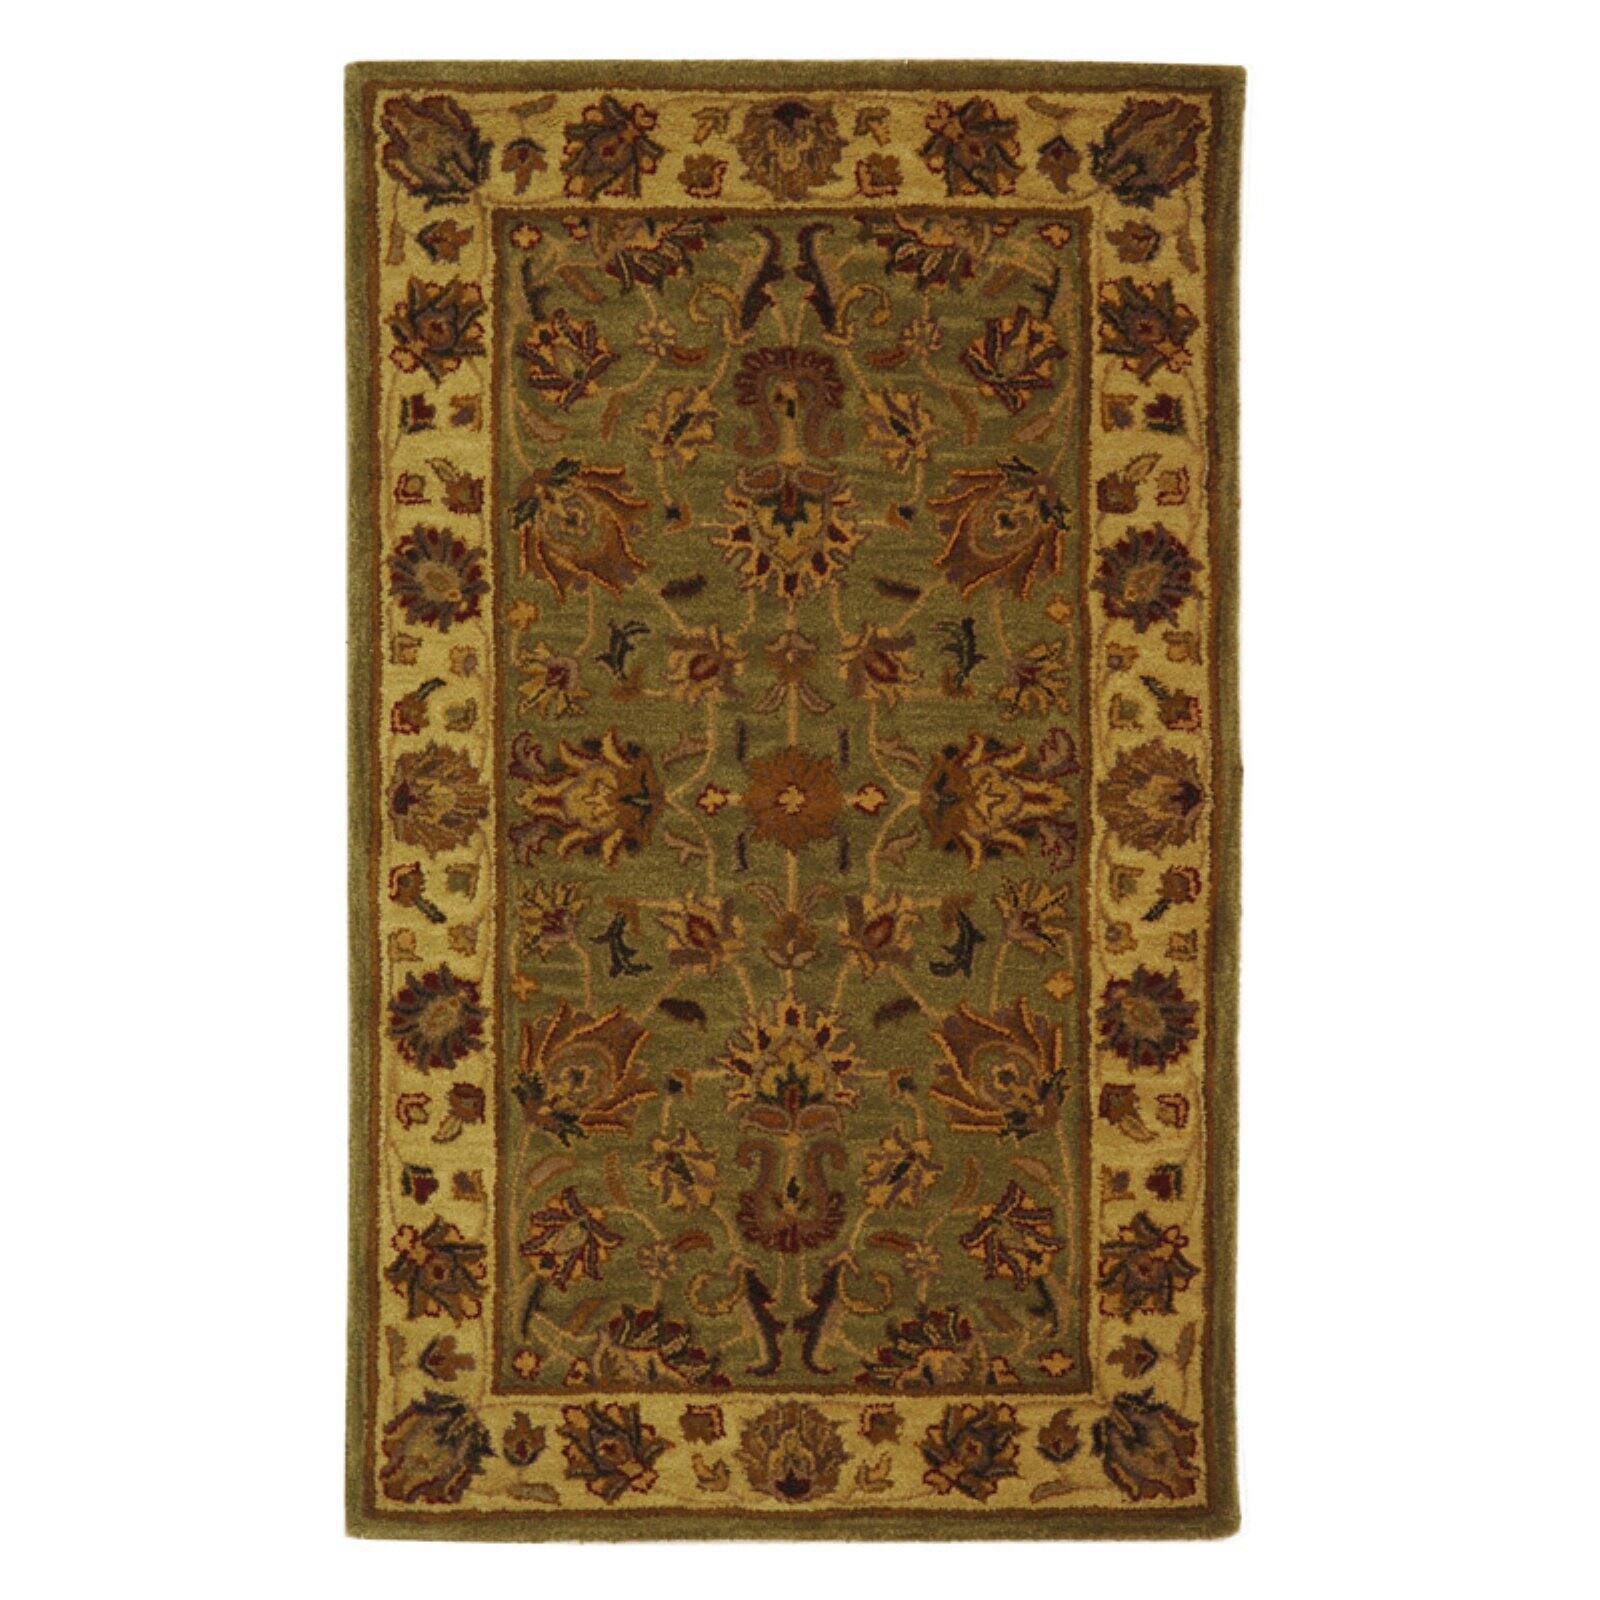 SAFAVIEH Heritage Regis Traditional Wool Area Rug, Green/Gold, 6' x 9' - image 4 of 10